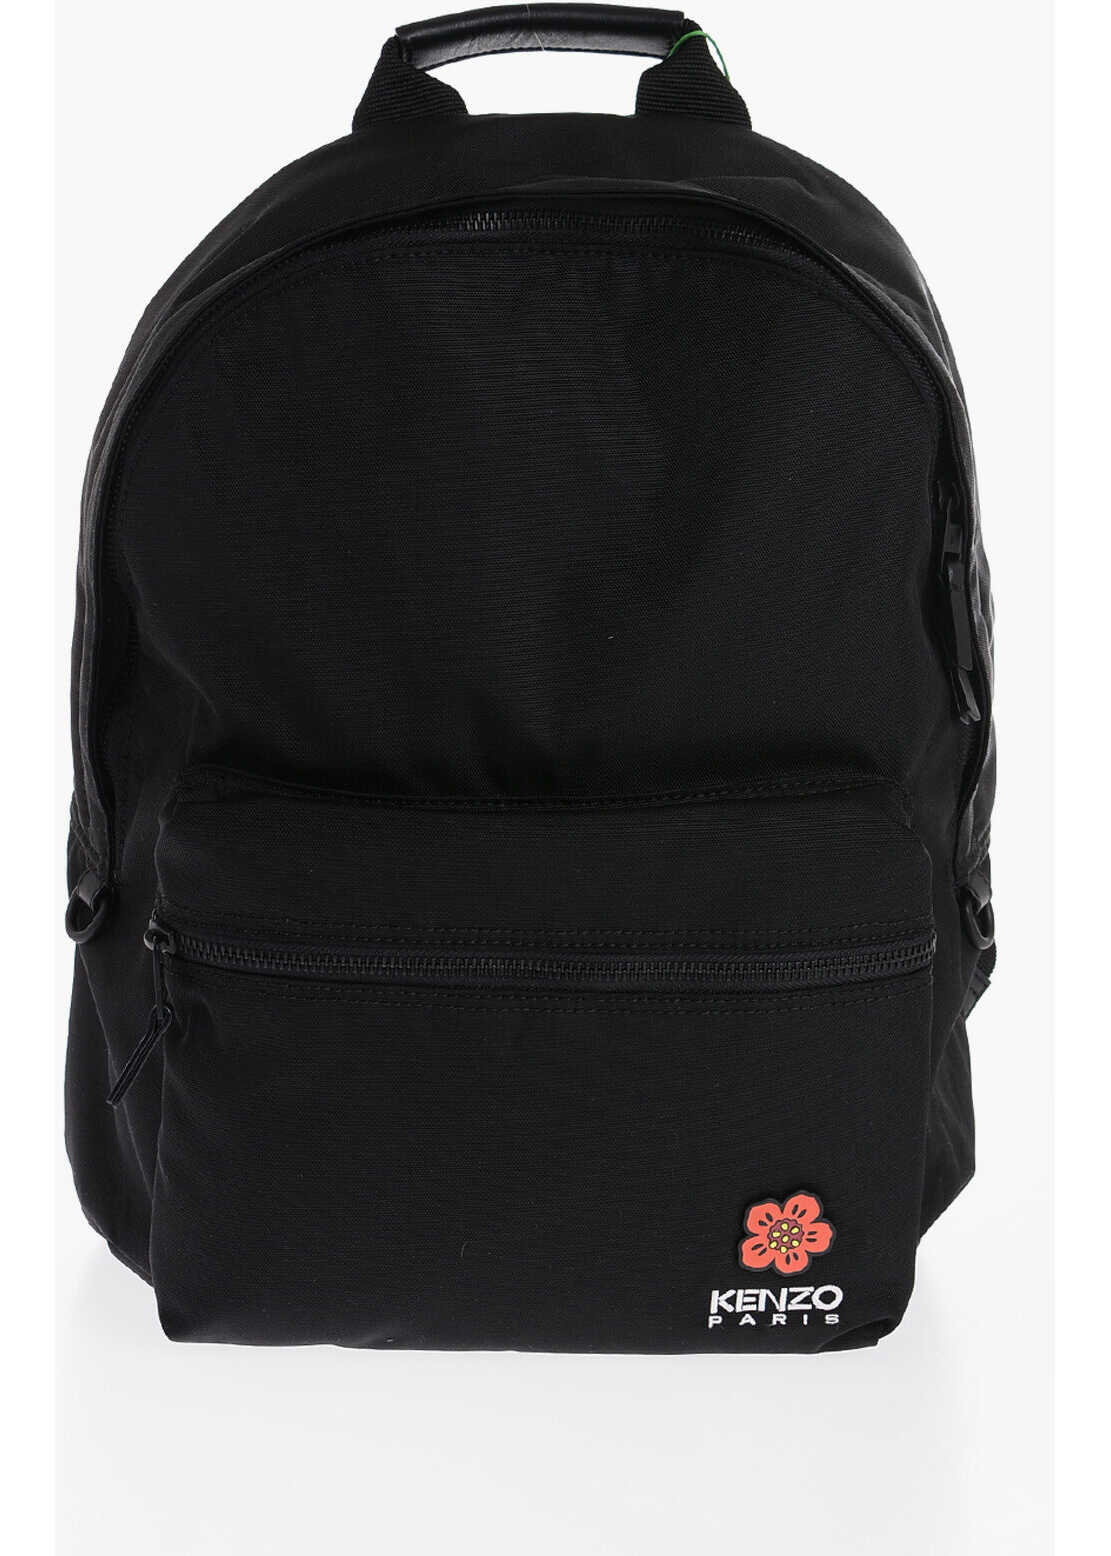 Kenzo Solid Color Nylon Backpack Black